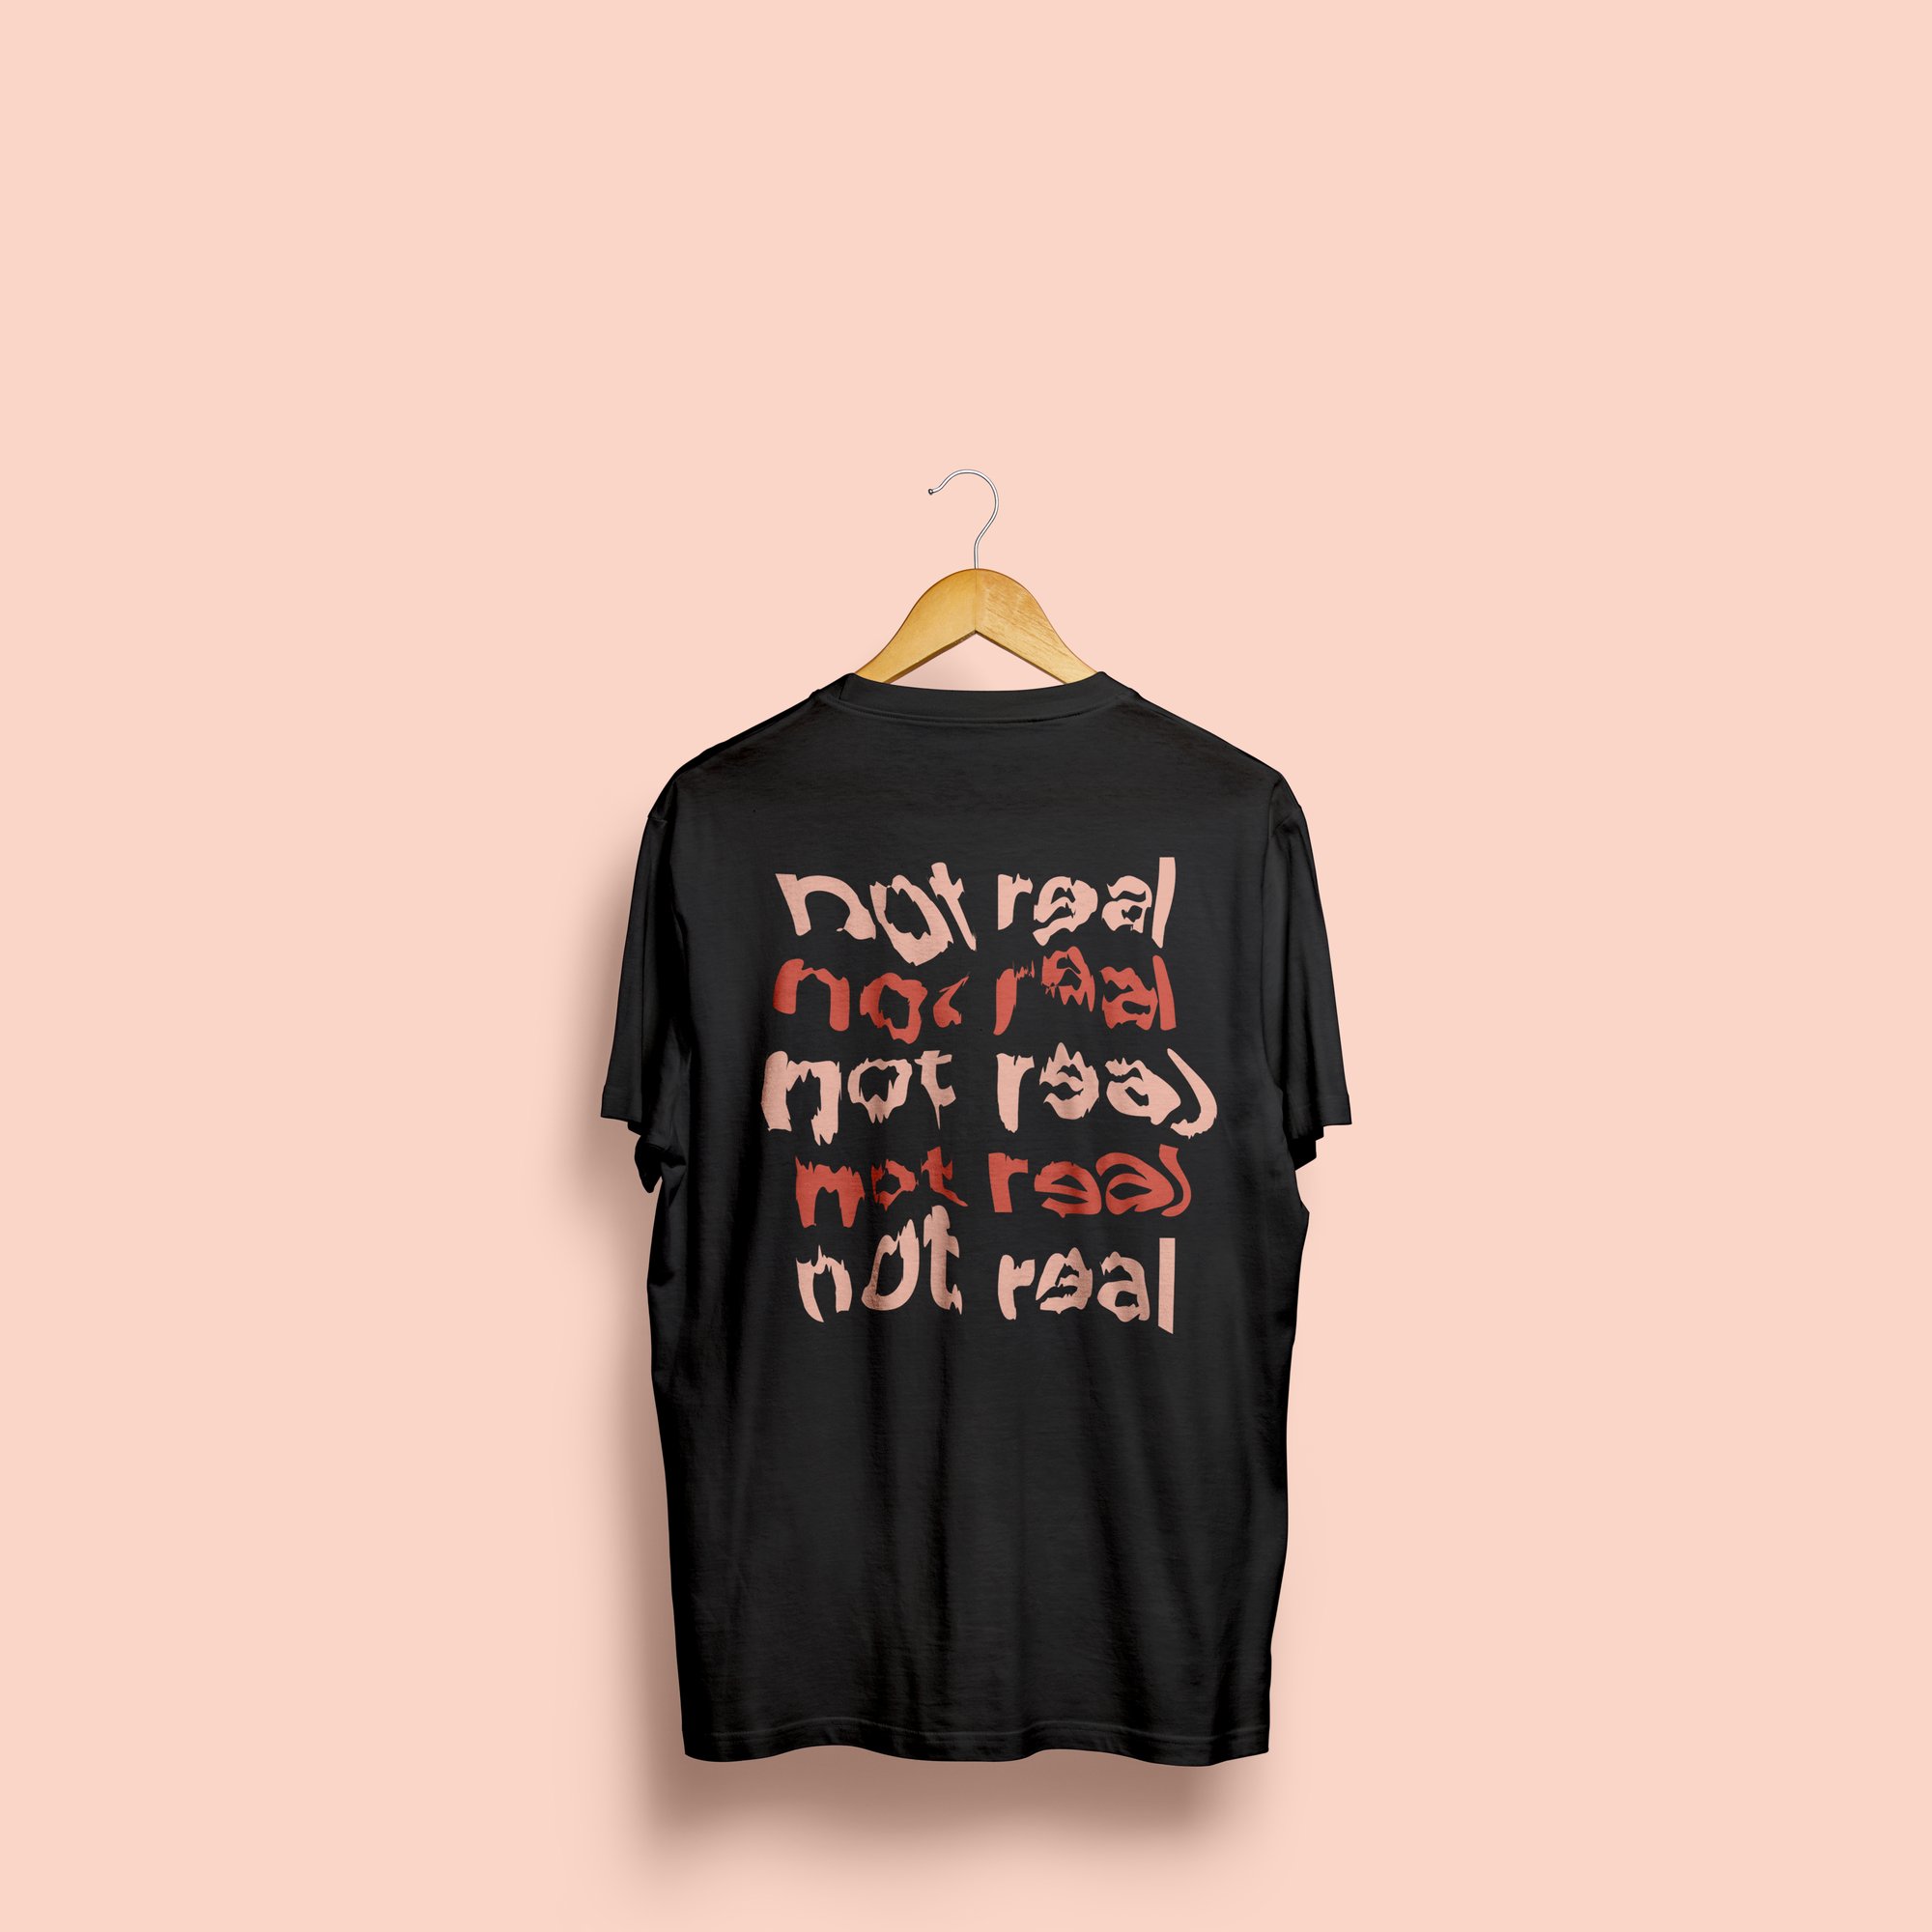 Image of warped reality t-shirt